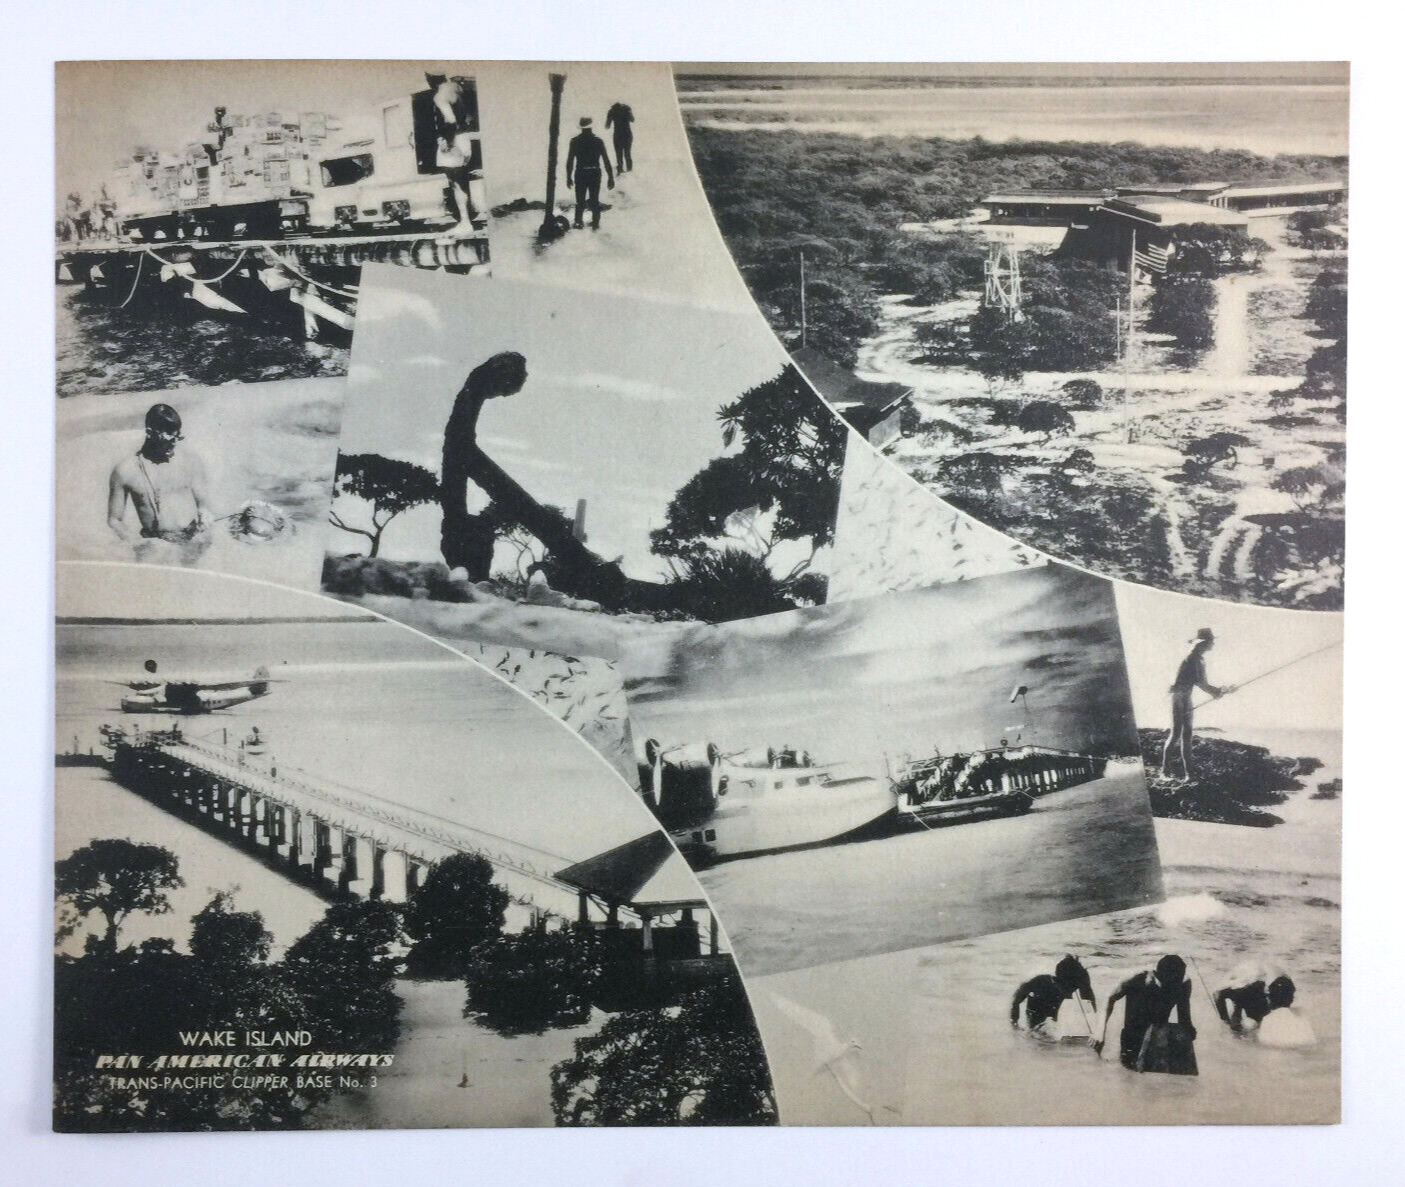 1939 Pan Am Photo Card Wake Island Pacific Clipper Base Round The World Tour